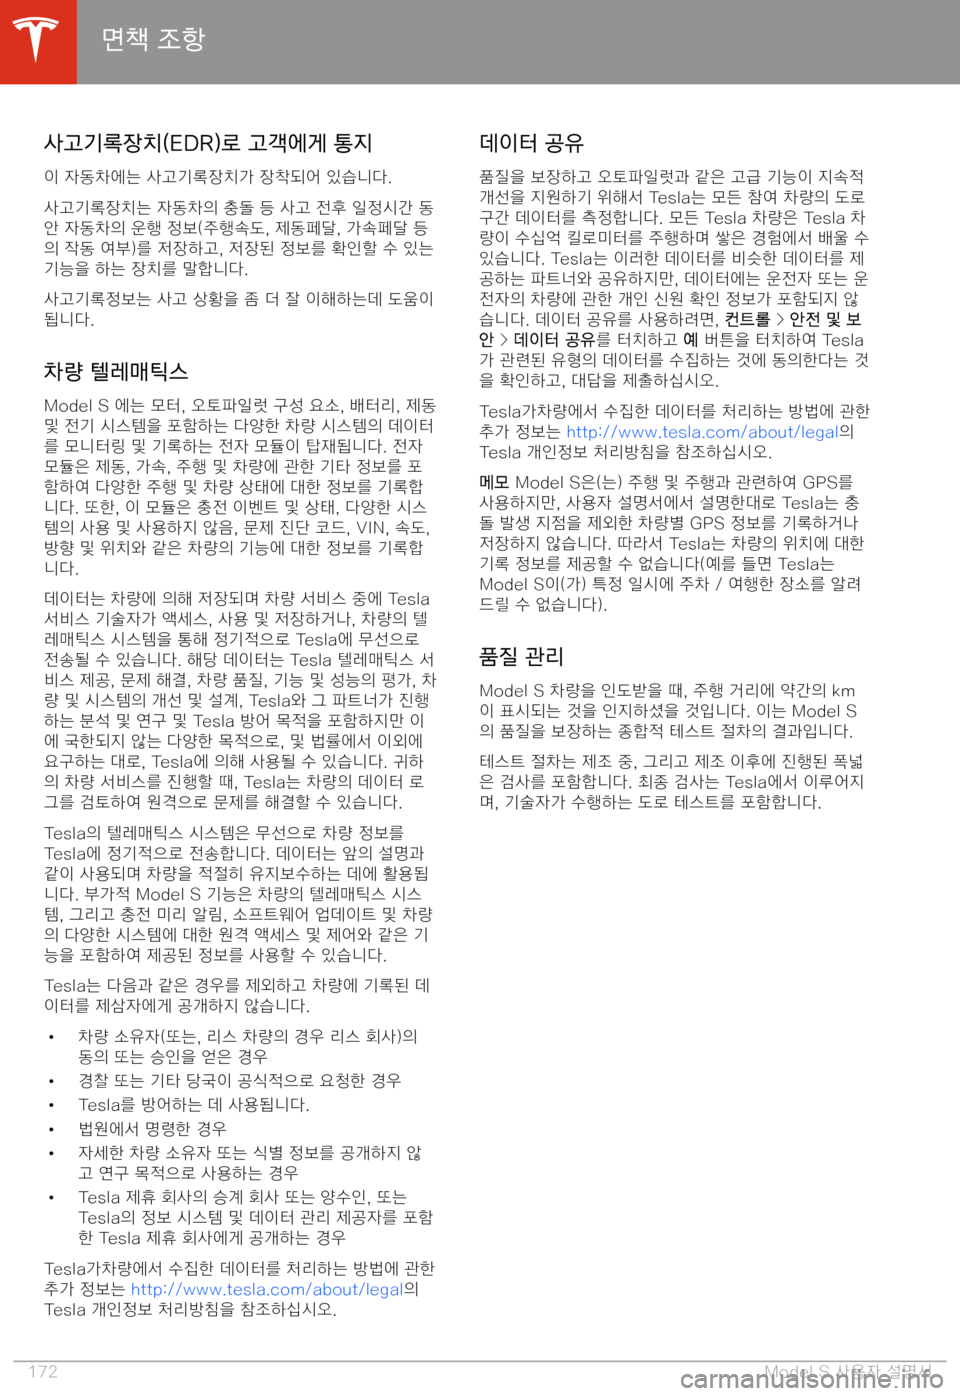 TESLA MODEL S 2020  사용자 가이드 (in Korean) 0tBb� >pKm
6